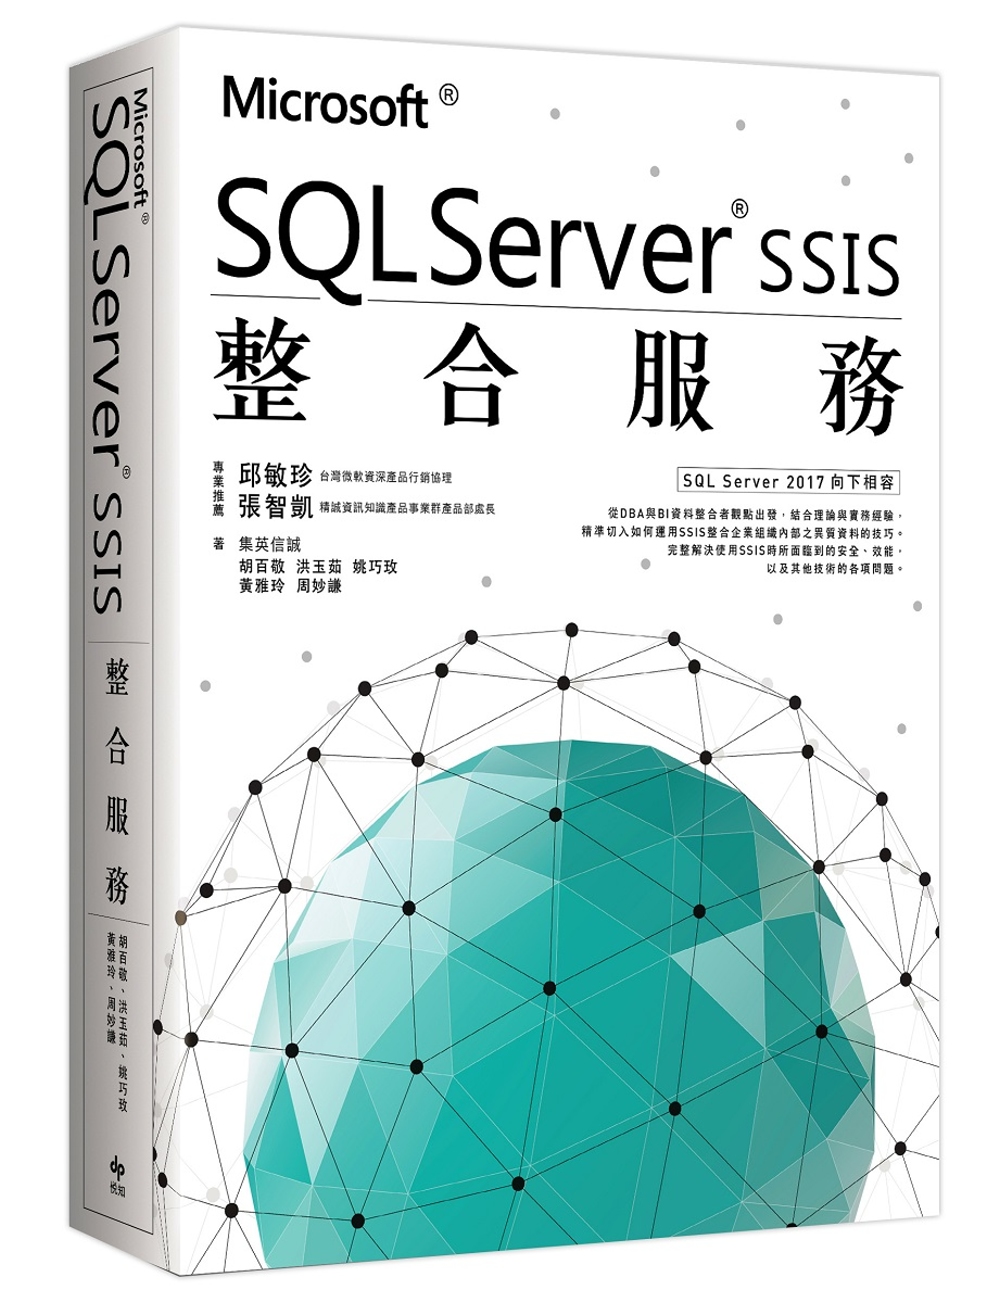 Microsoft® SQL Server® SSIS 整合服務